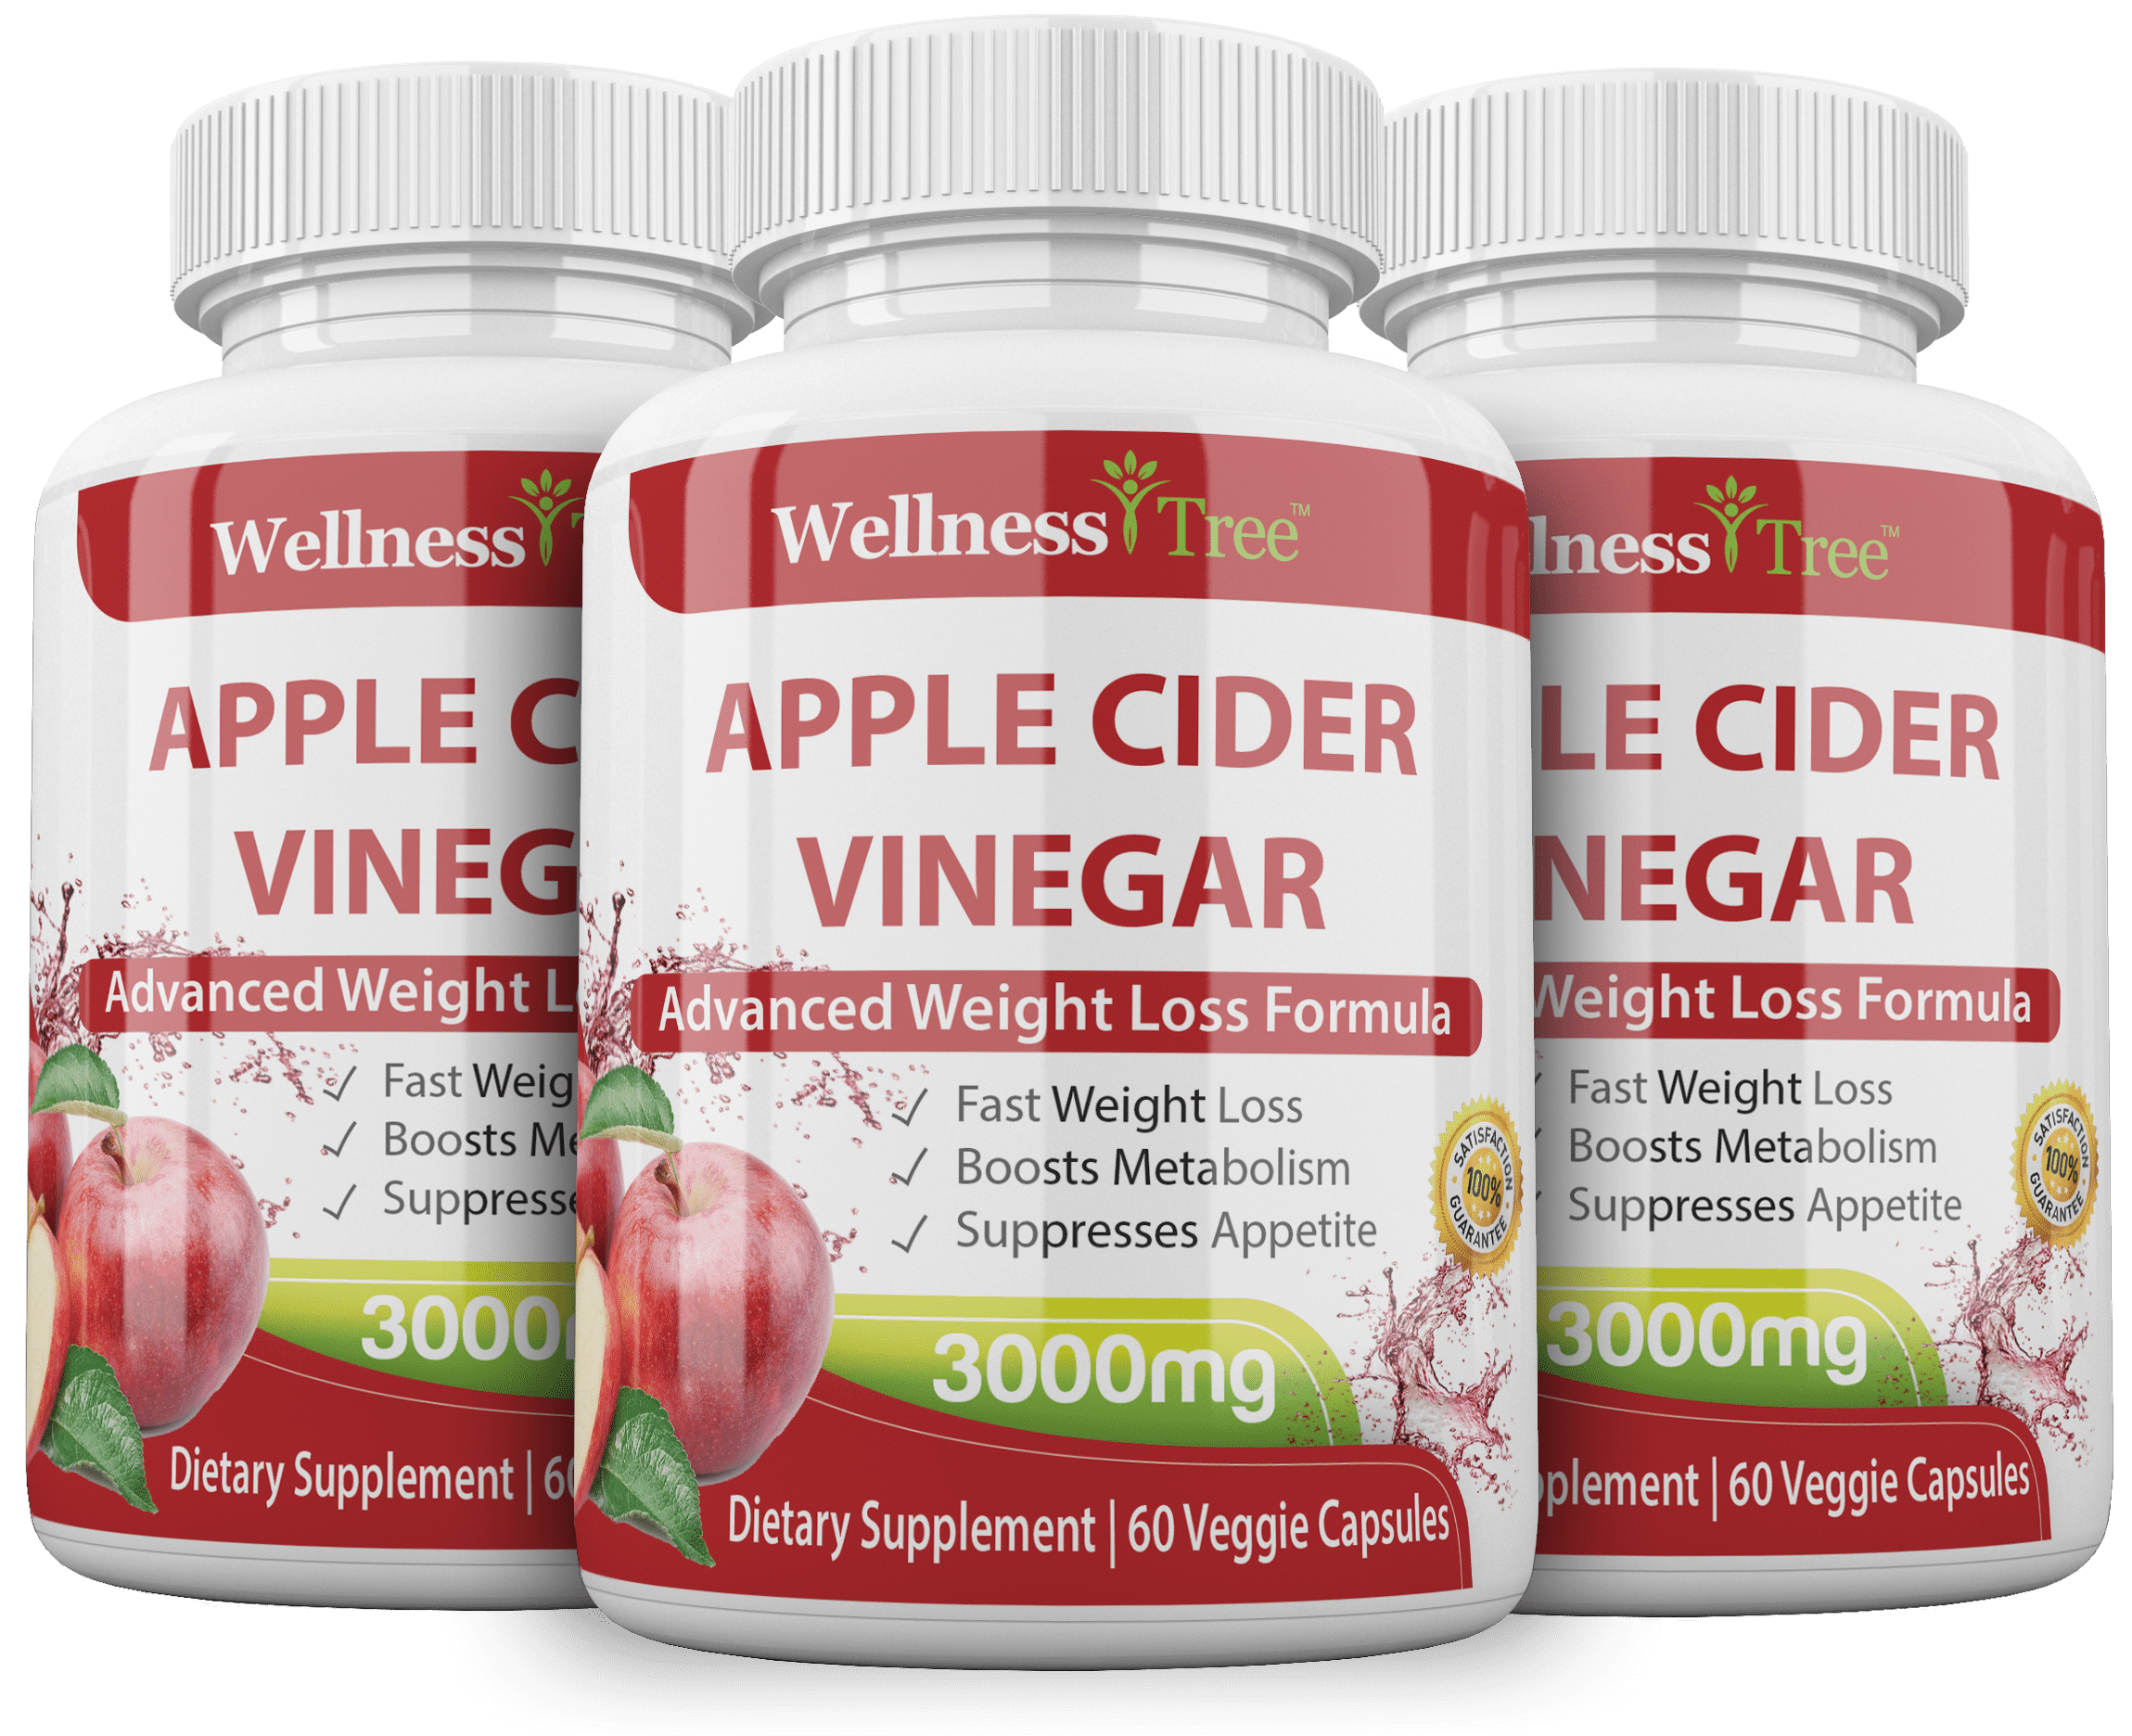 How do Apple Cider Vinegar Pills Aid Weight Loss?